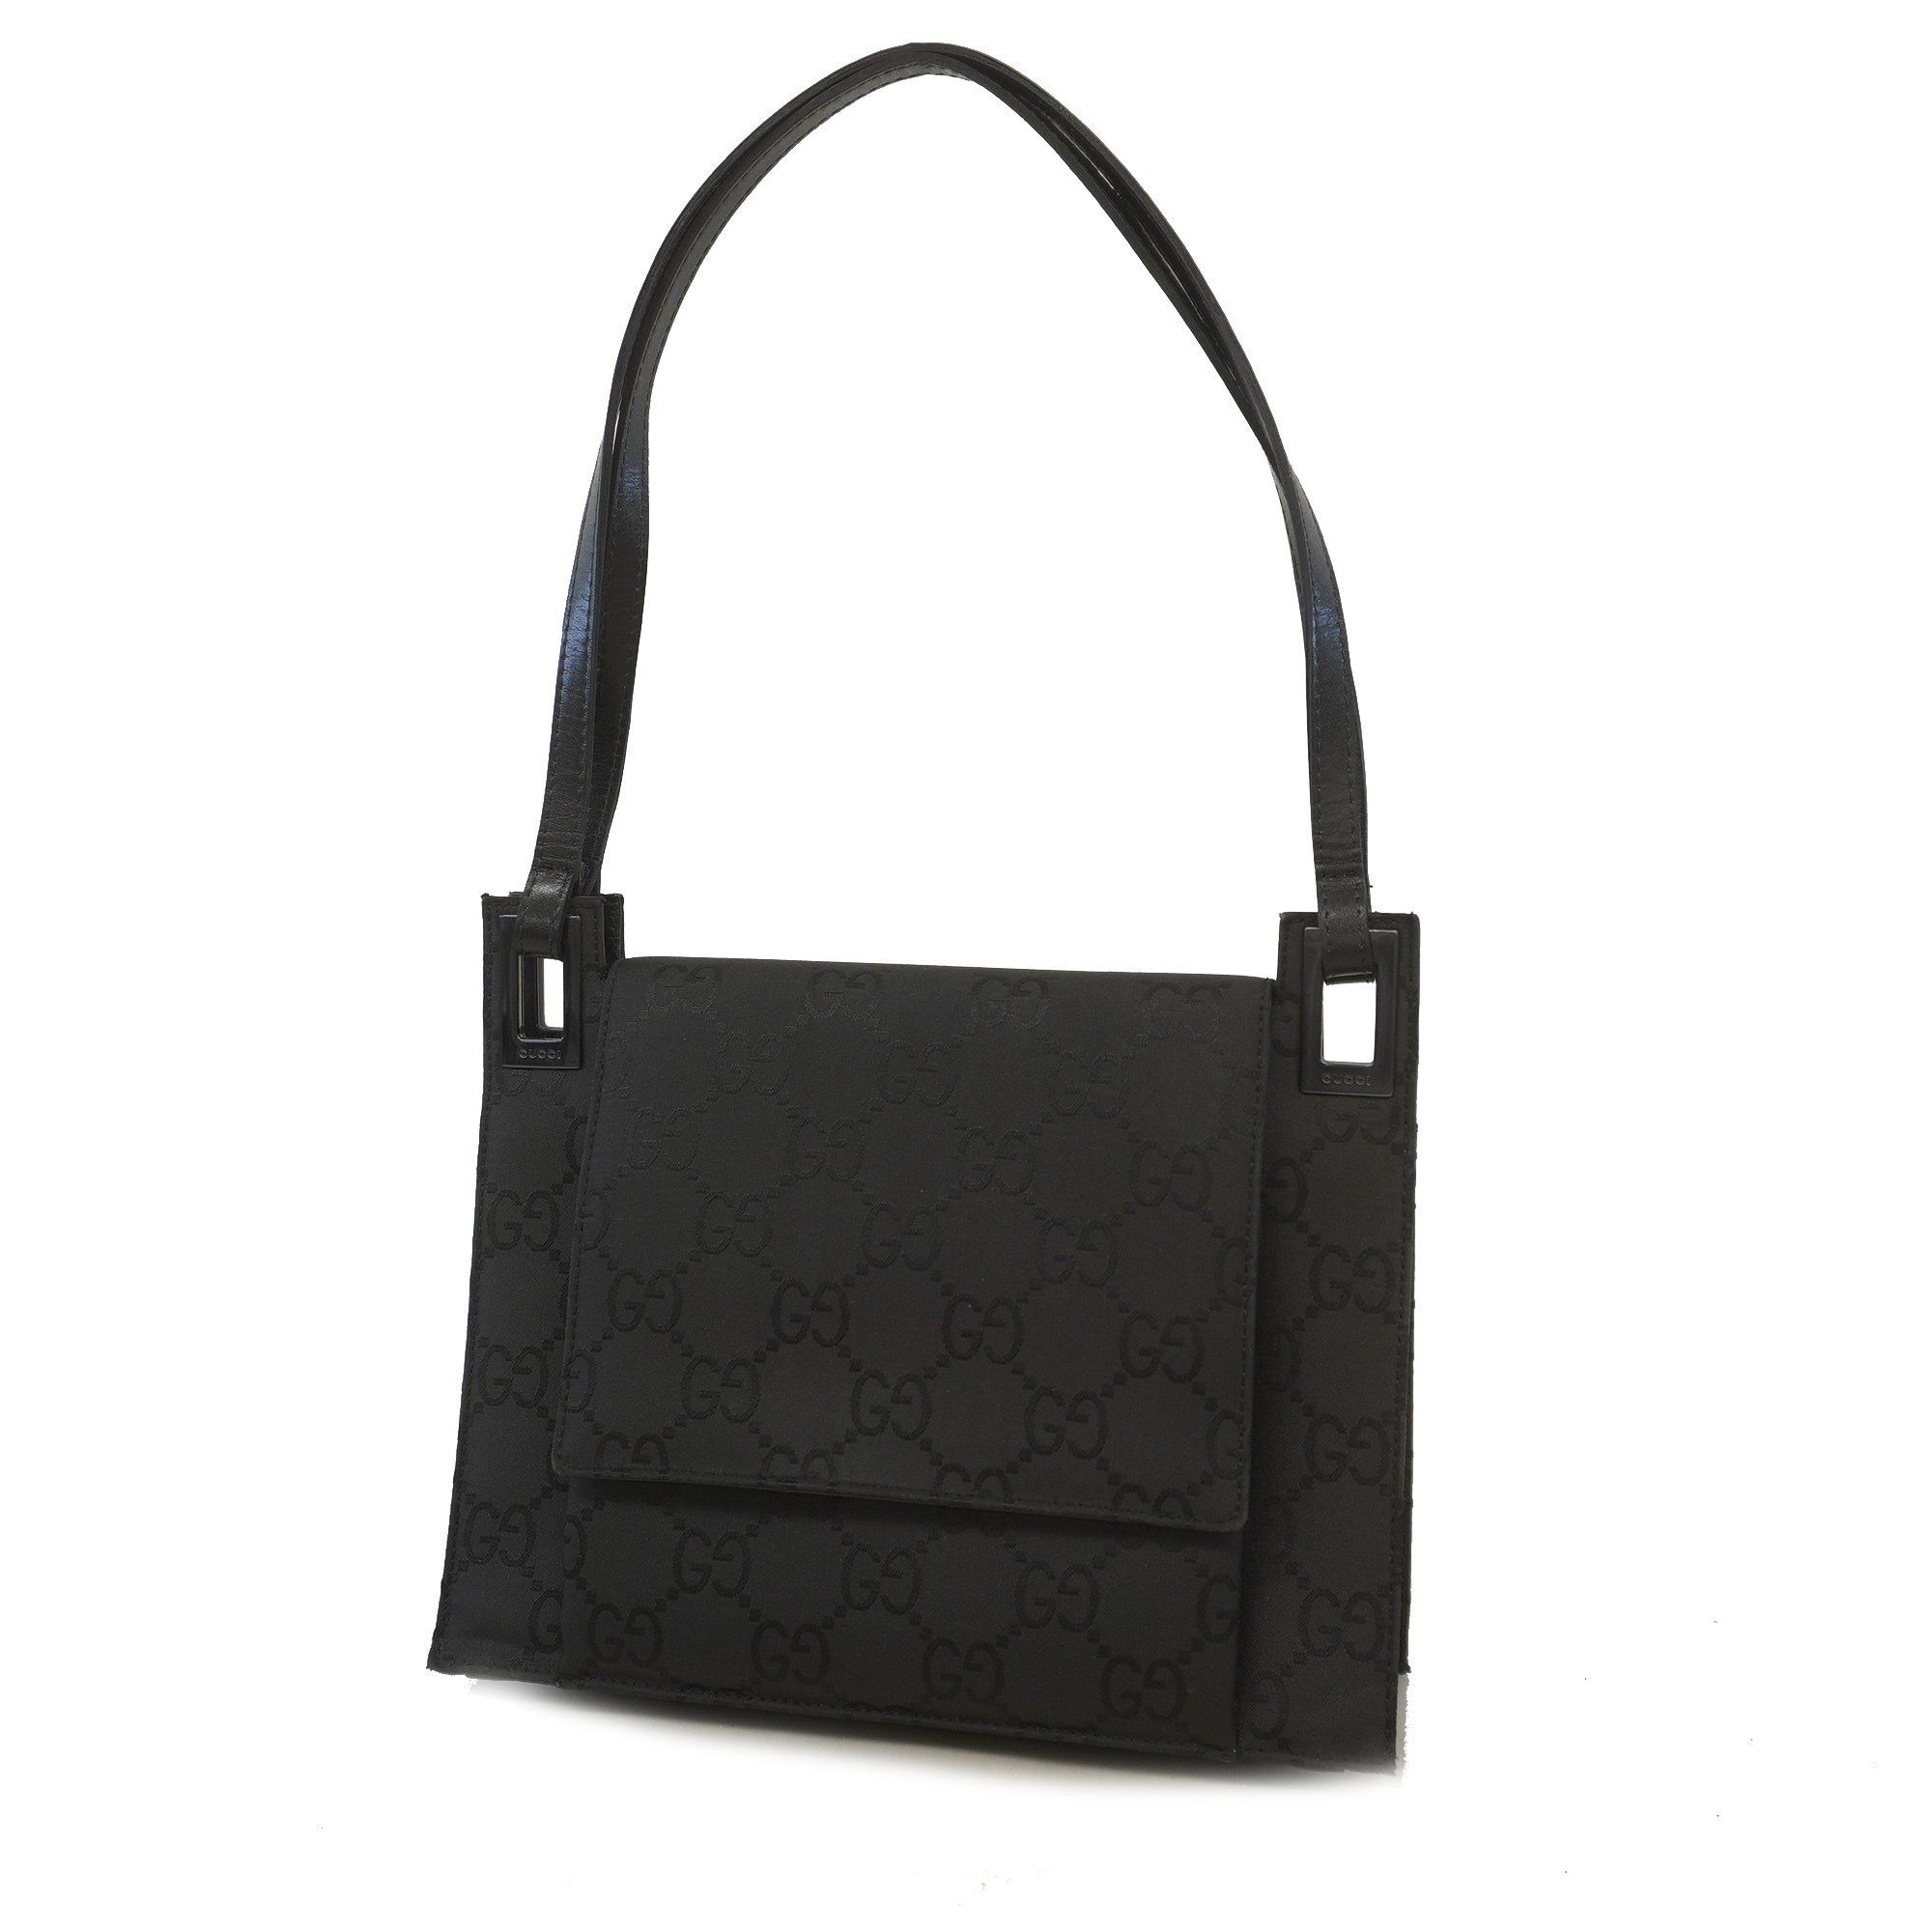 Gucci Auth Gucci handbag 001 3068 nylon black silver metal | Grailed